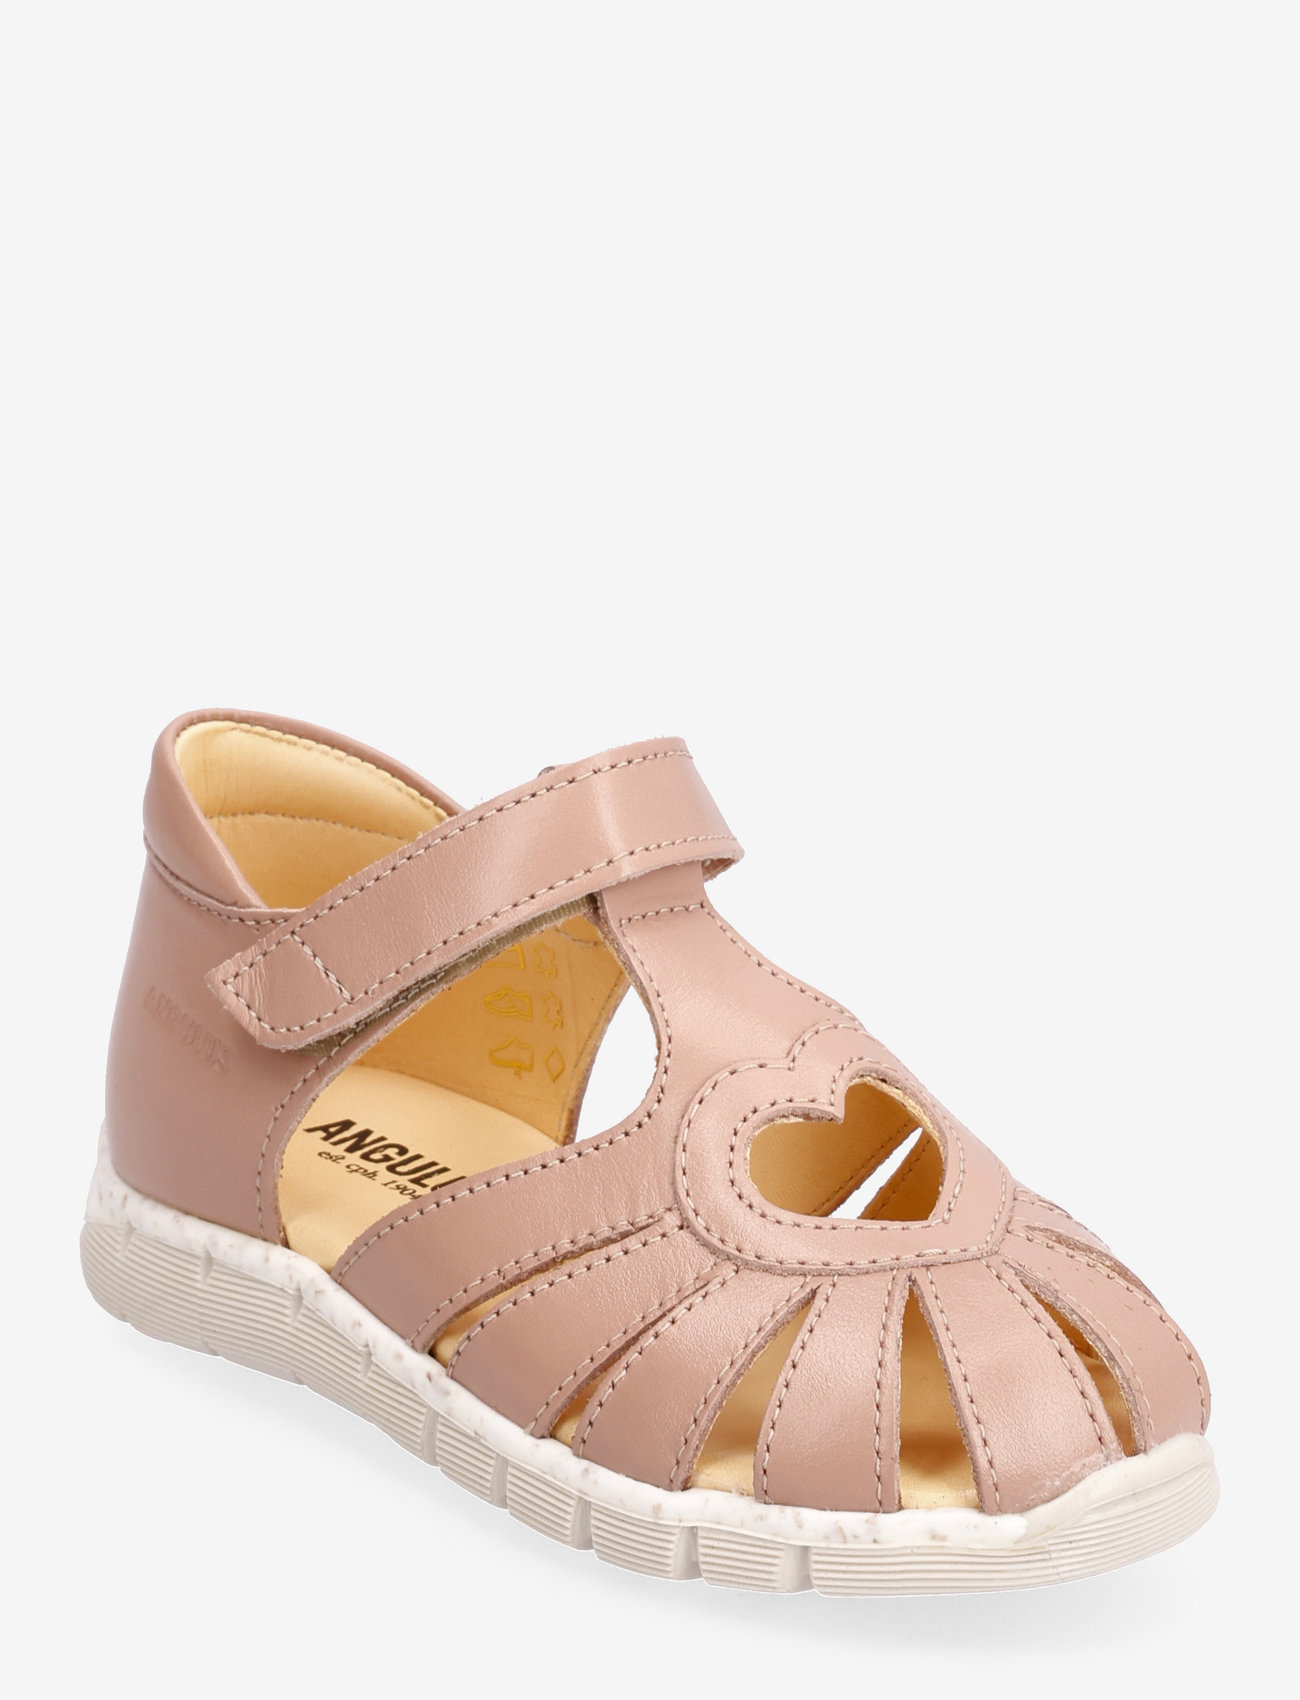 ANGULUS - Sandals - flat - closed toe -  - summer savings - 1470 dark peach - 0